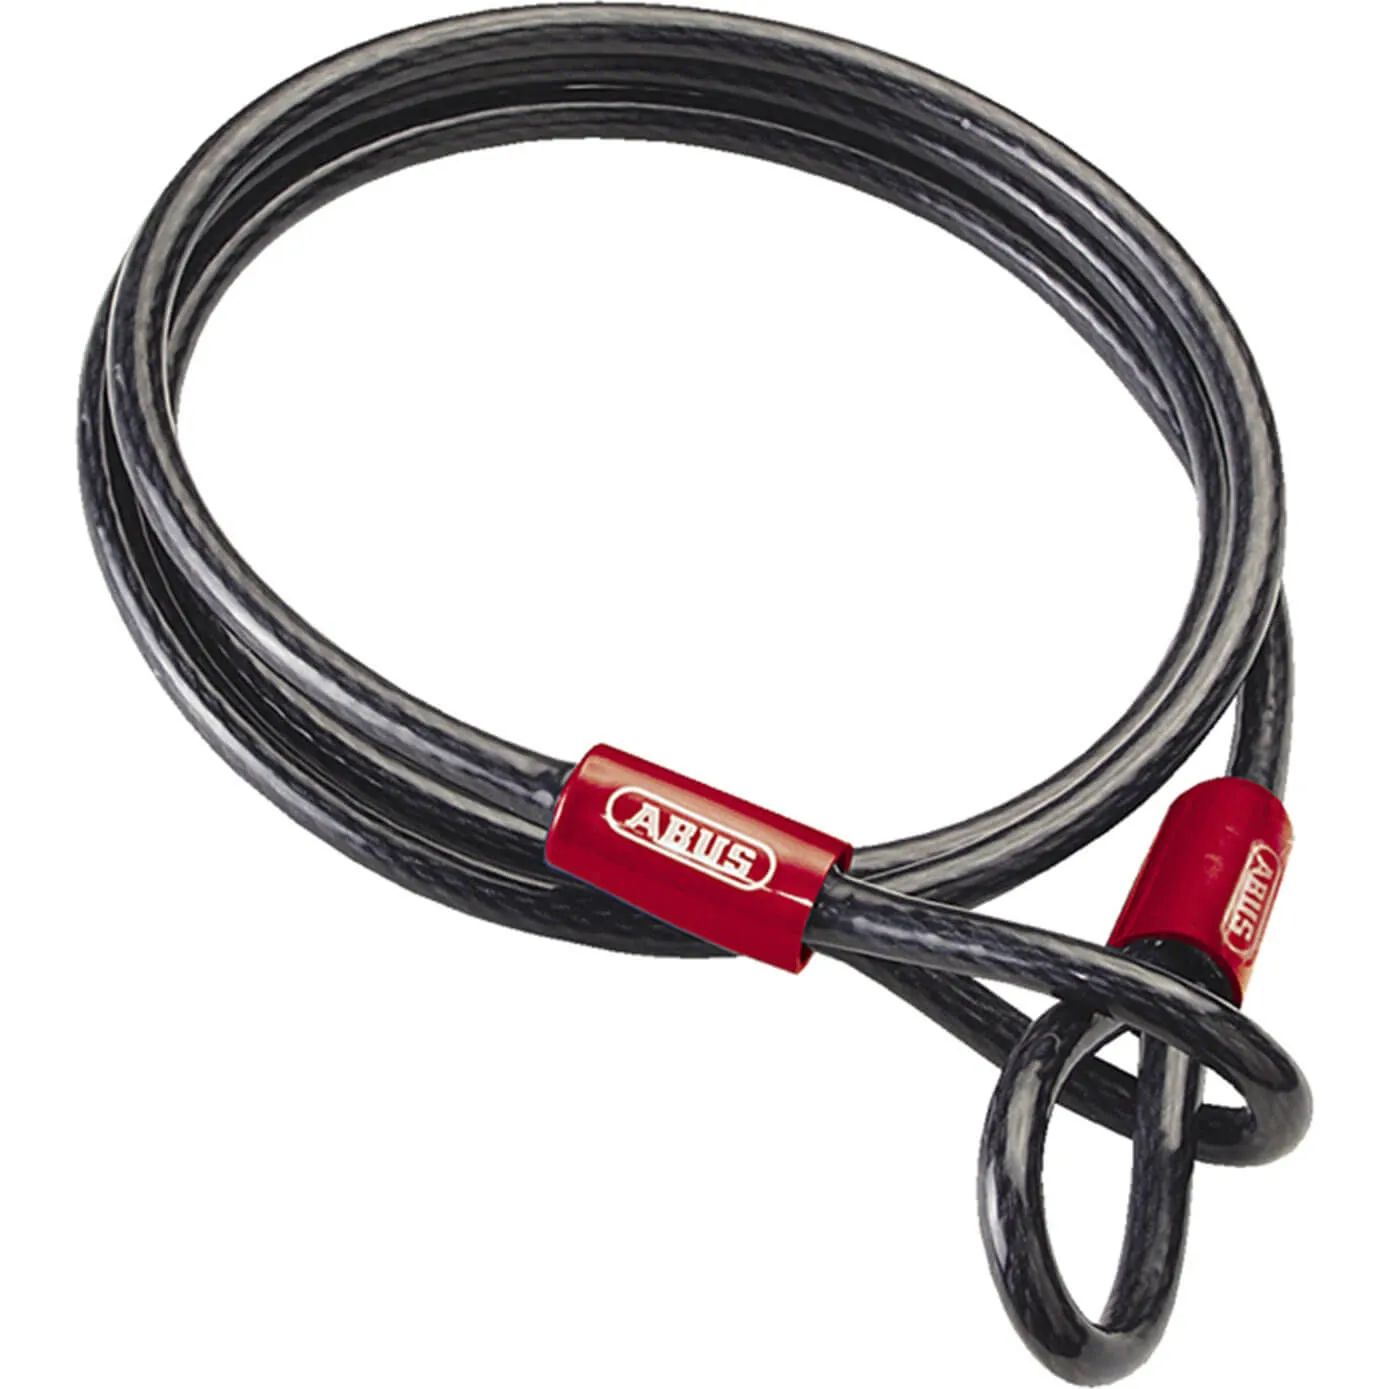 Abus Cobra Security Cable - 10mm, 5m